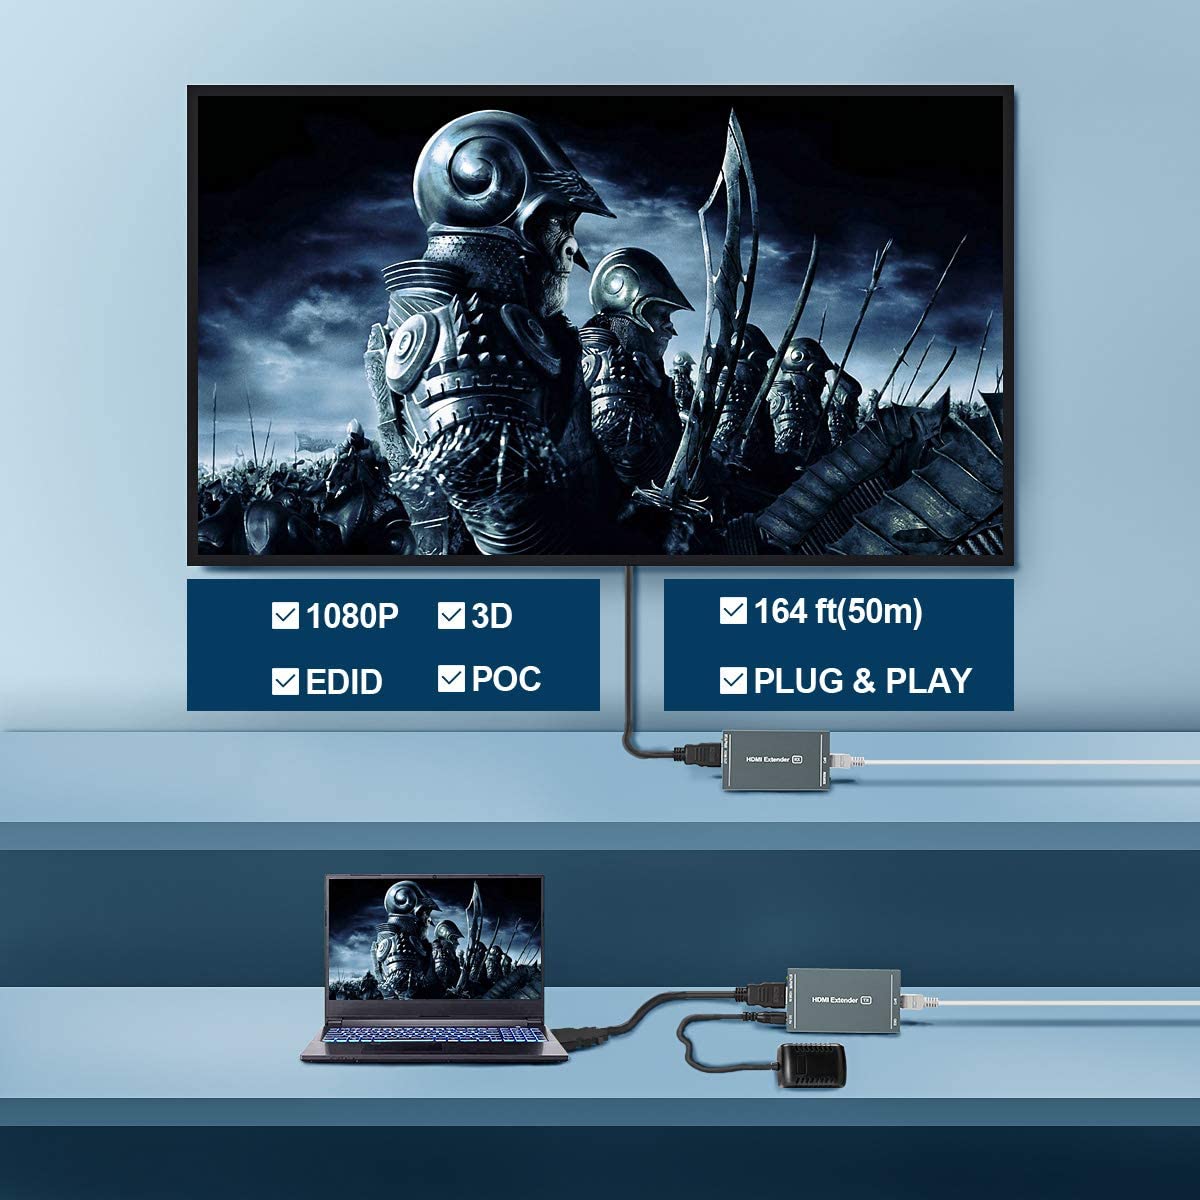 Extensor HDMI transmisión sin comprimir Full HD – Computer Technology  Service SRL